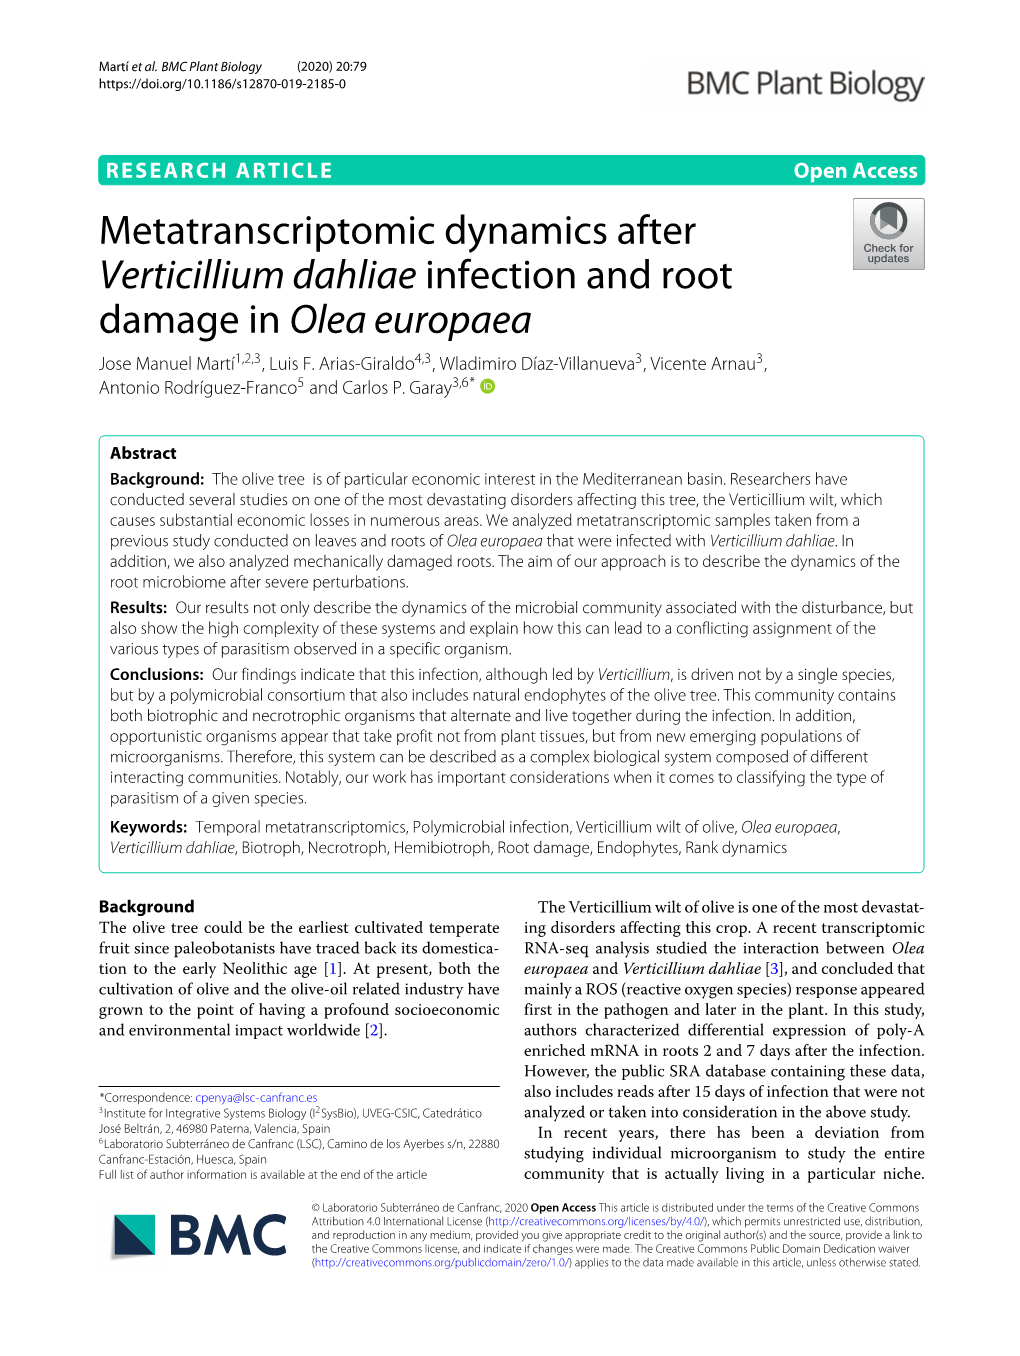 Metatranscriptomic Dynamics After Verticillium Dahliae Infection And